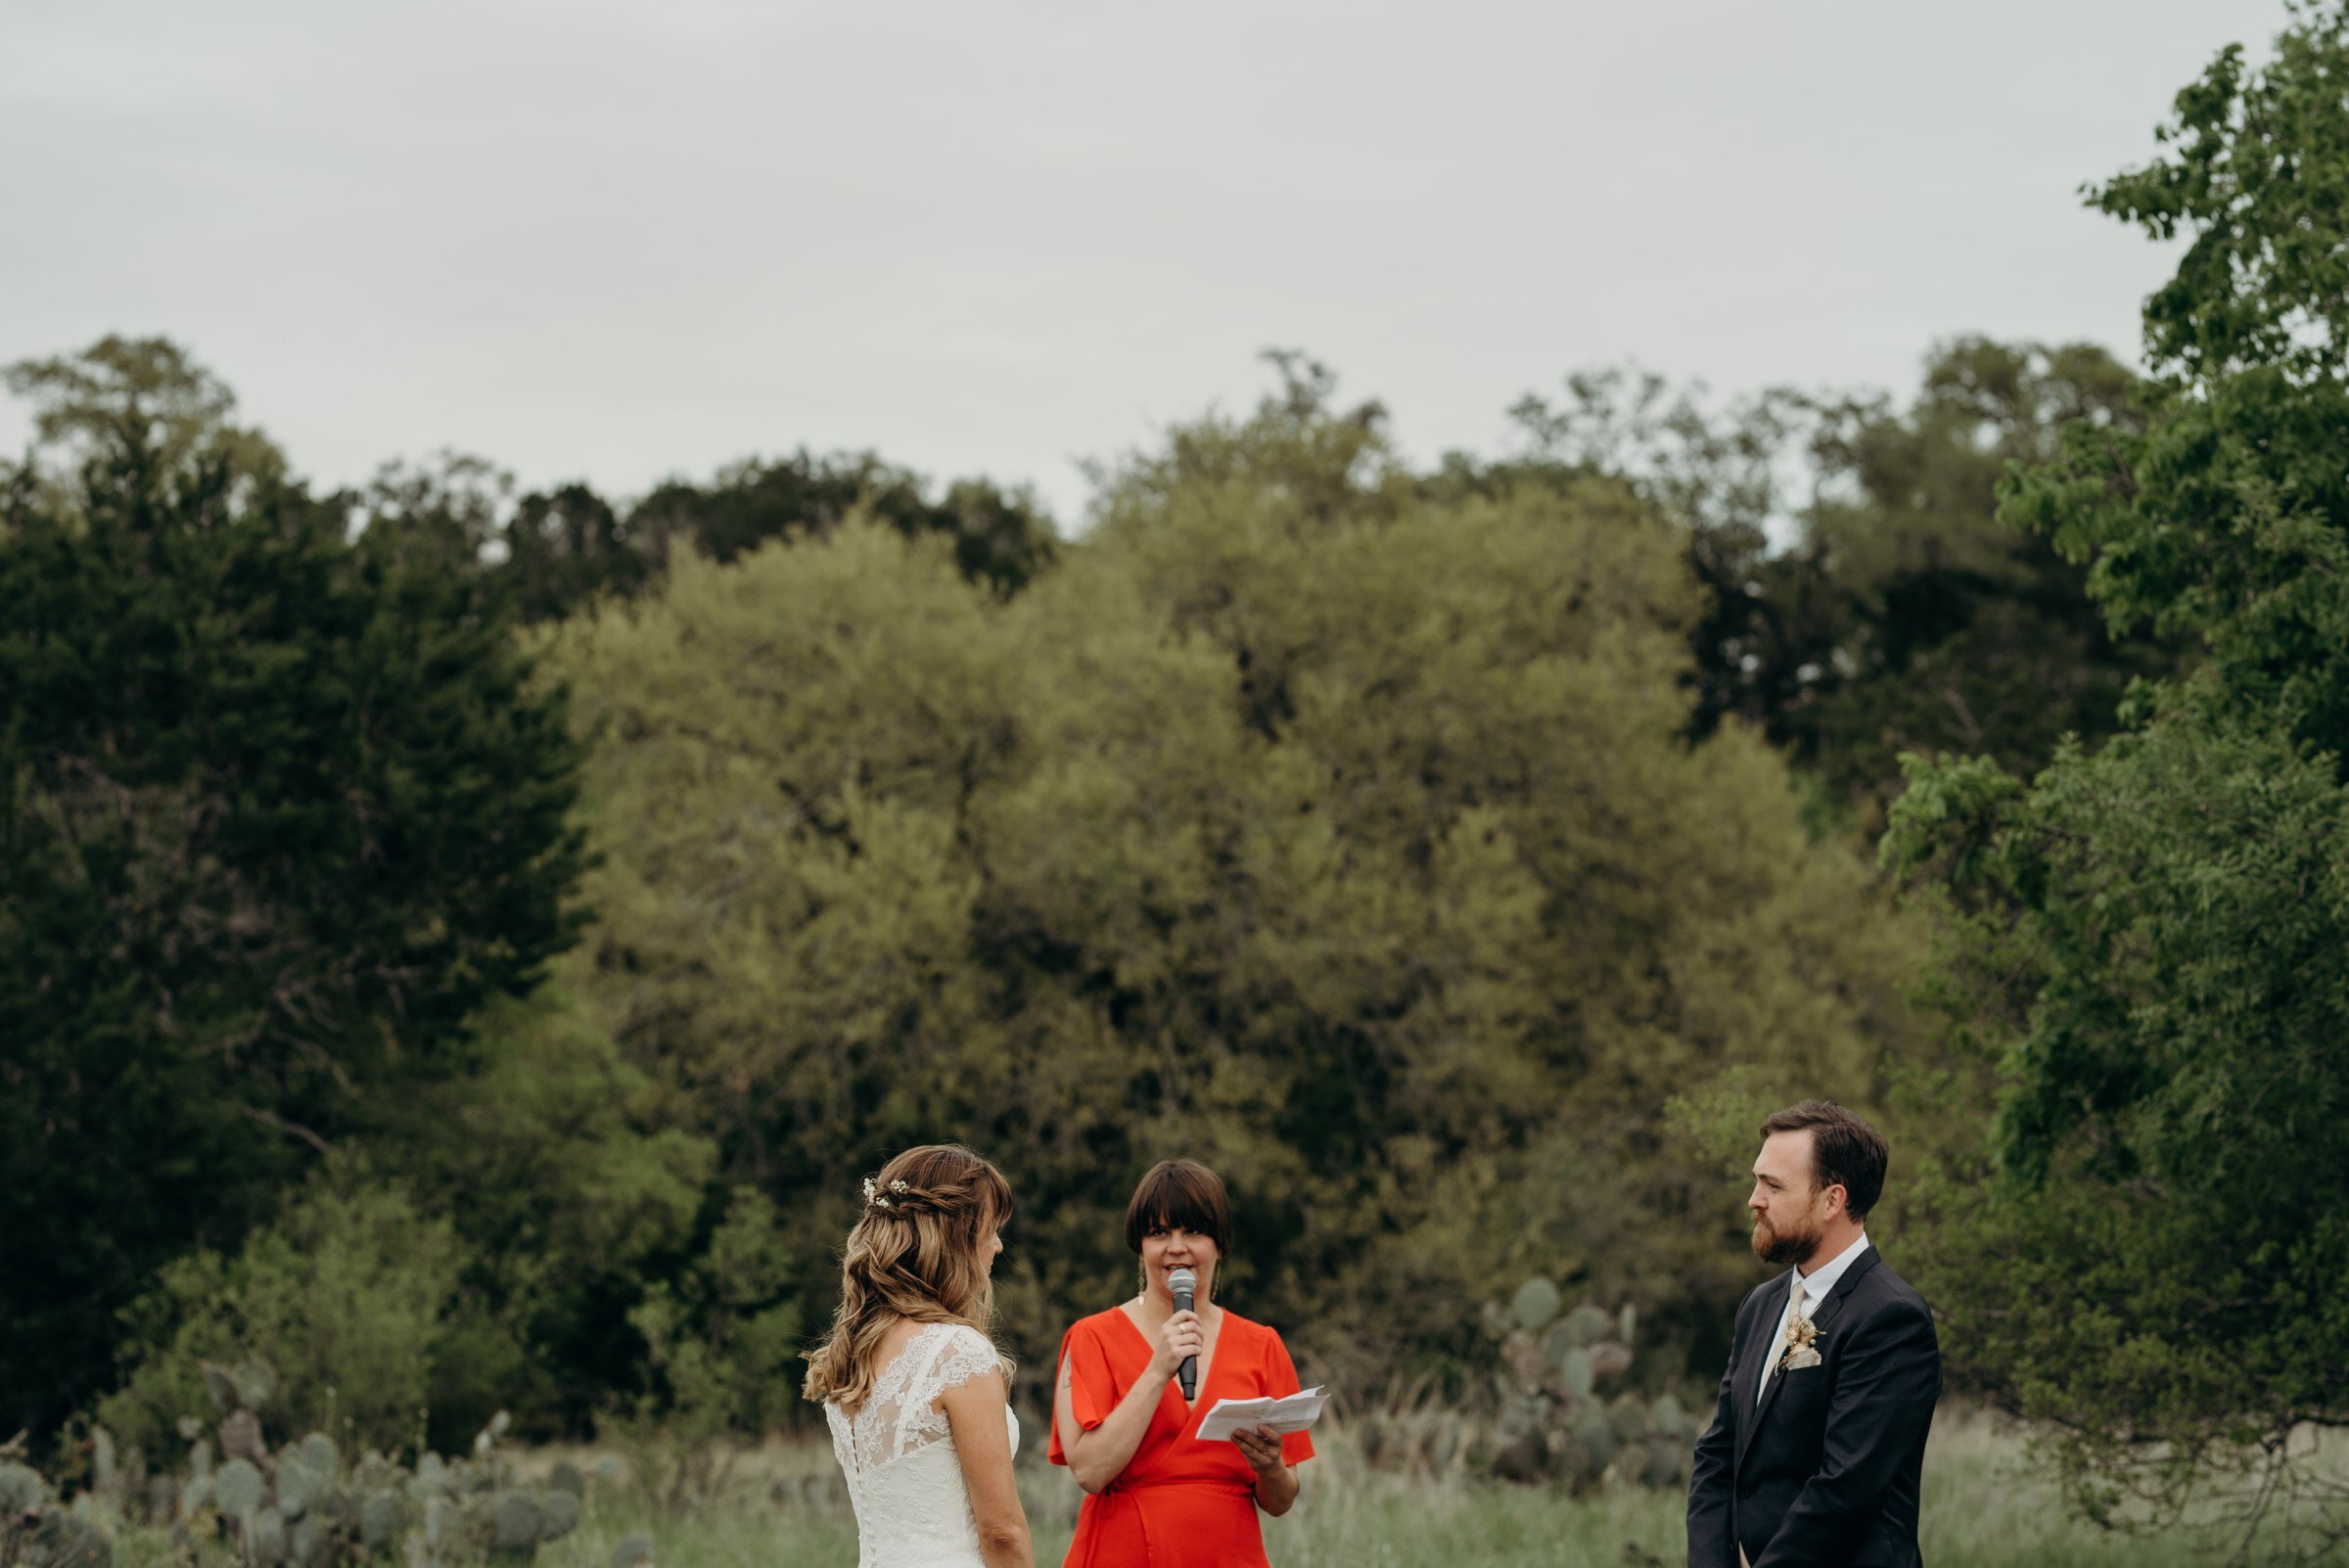  wedding ceremony in field plant at kyle wedding venue austin texas 